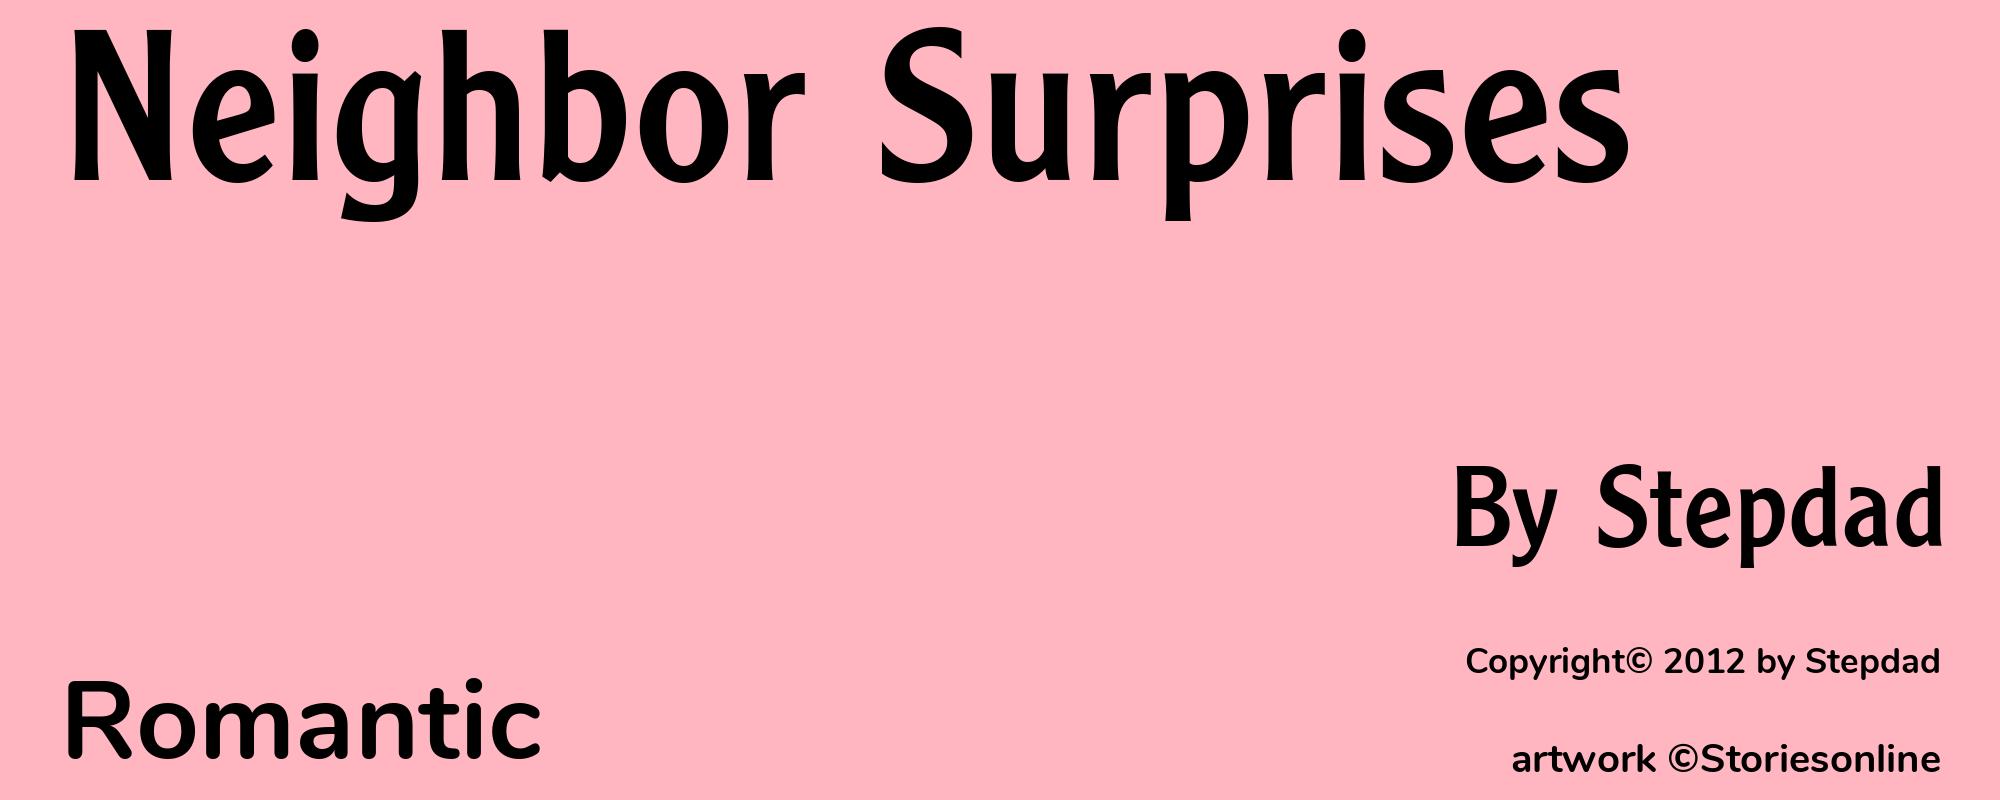 Neighbor Surprises - Cover